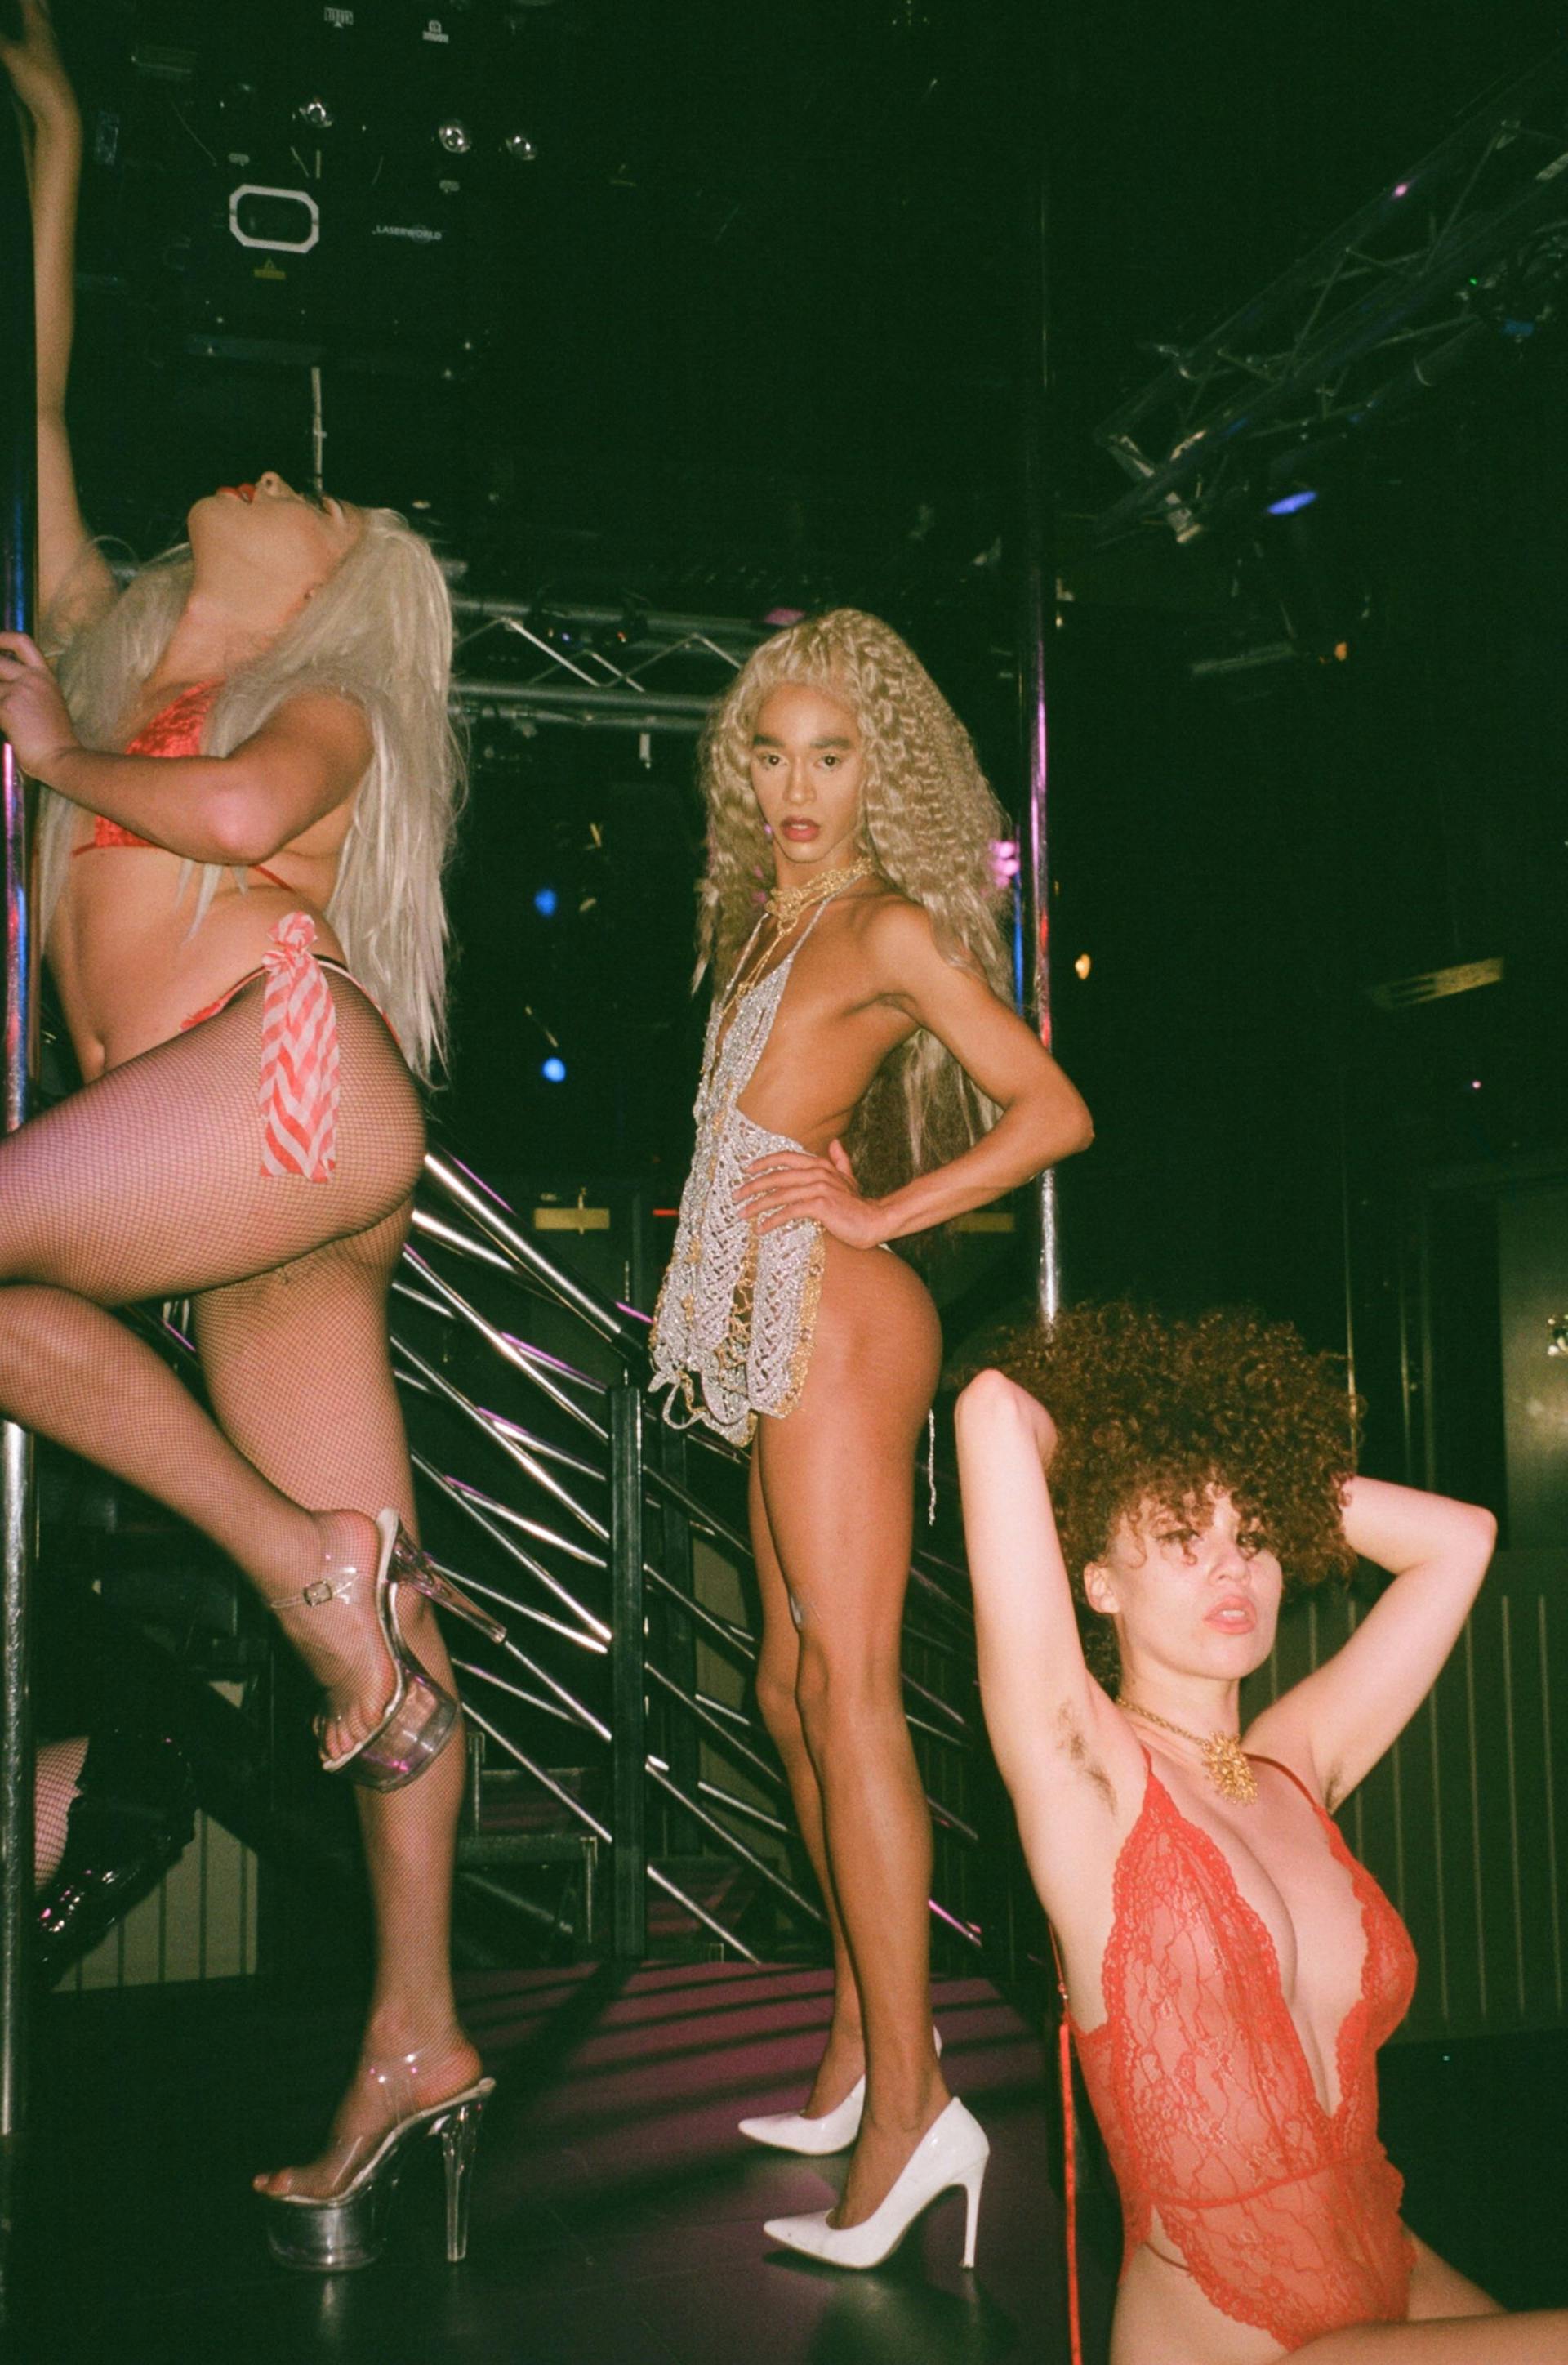 deepa jogani share tgirl strip club photos